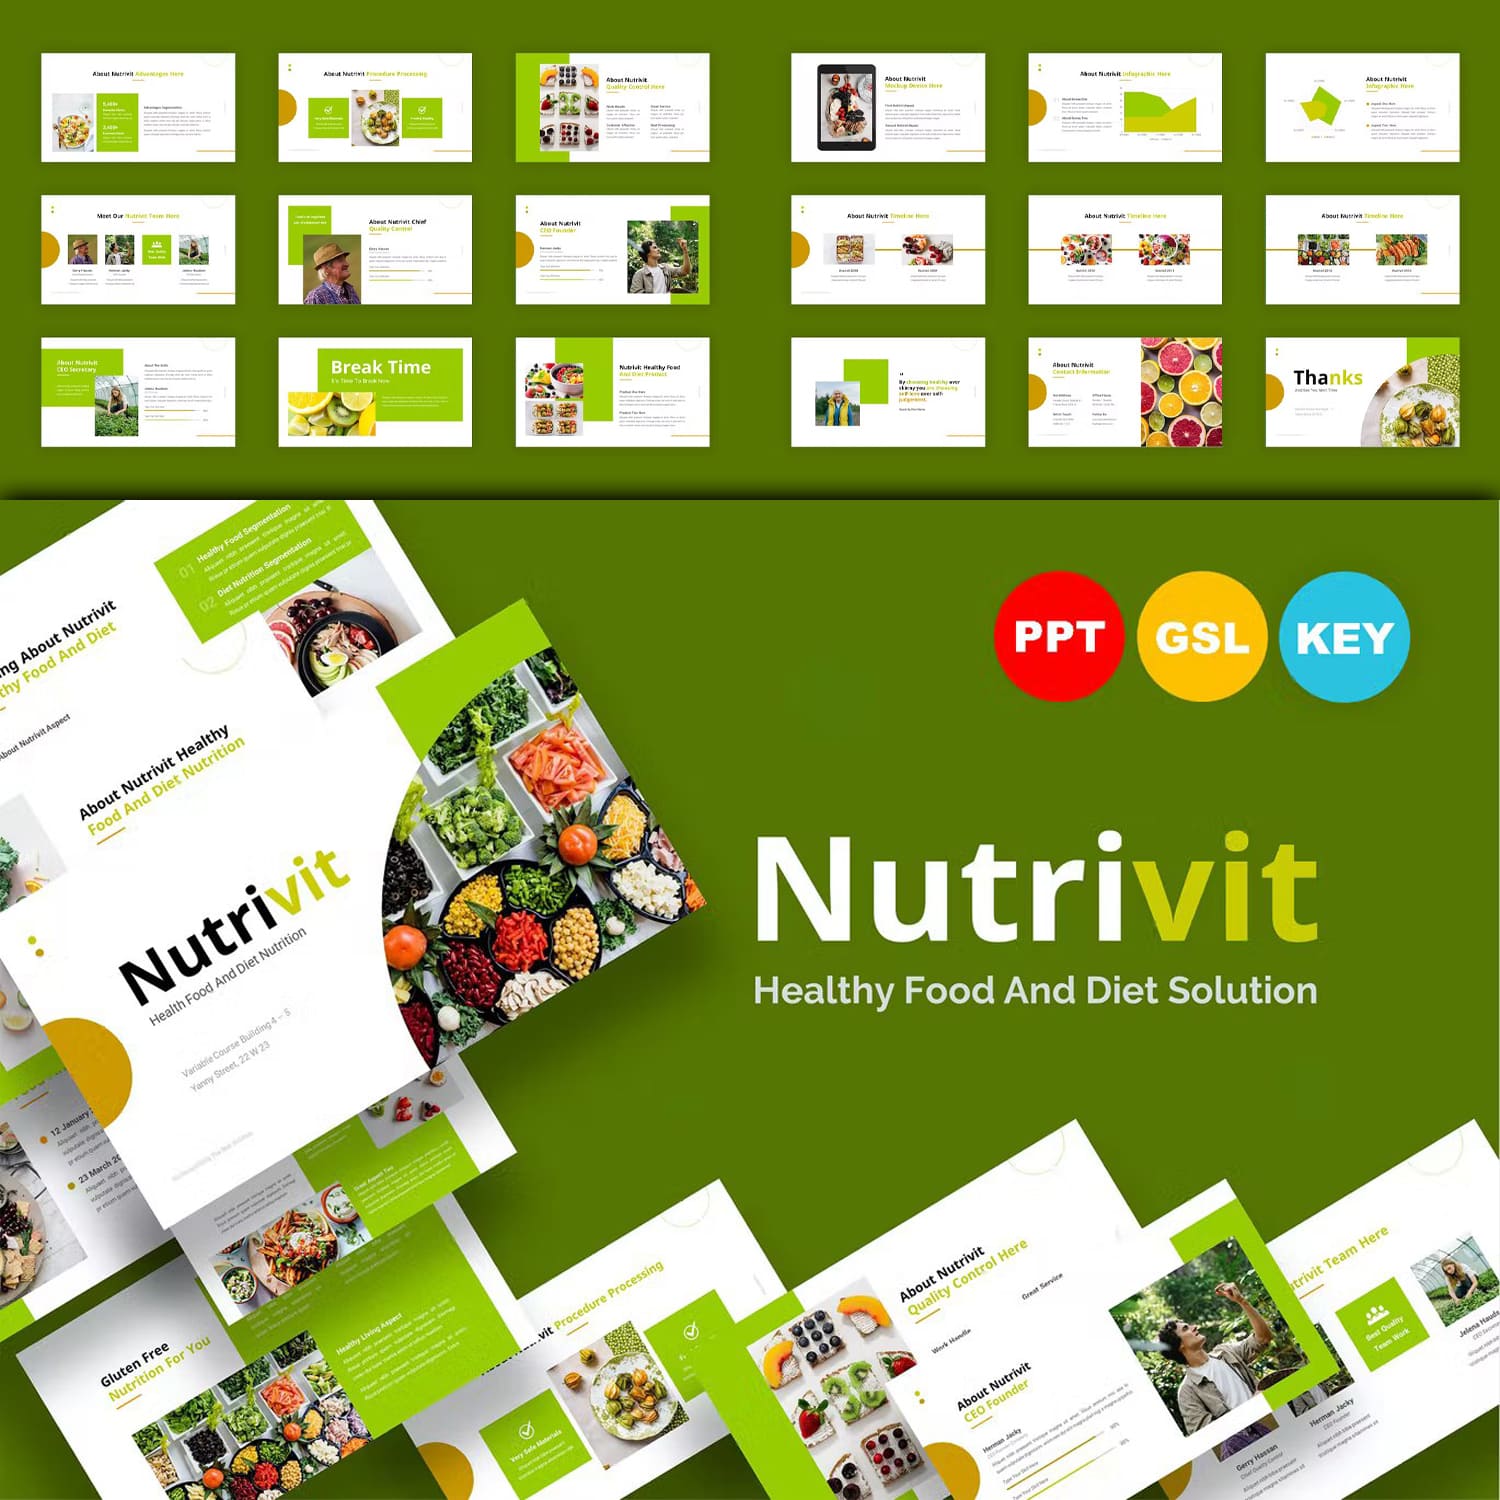 Nutrivit healthy food and nutrition presentation from Rometheme.